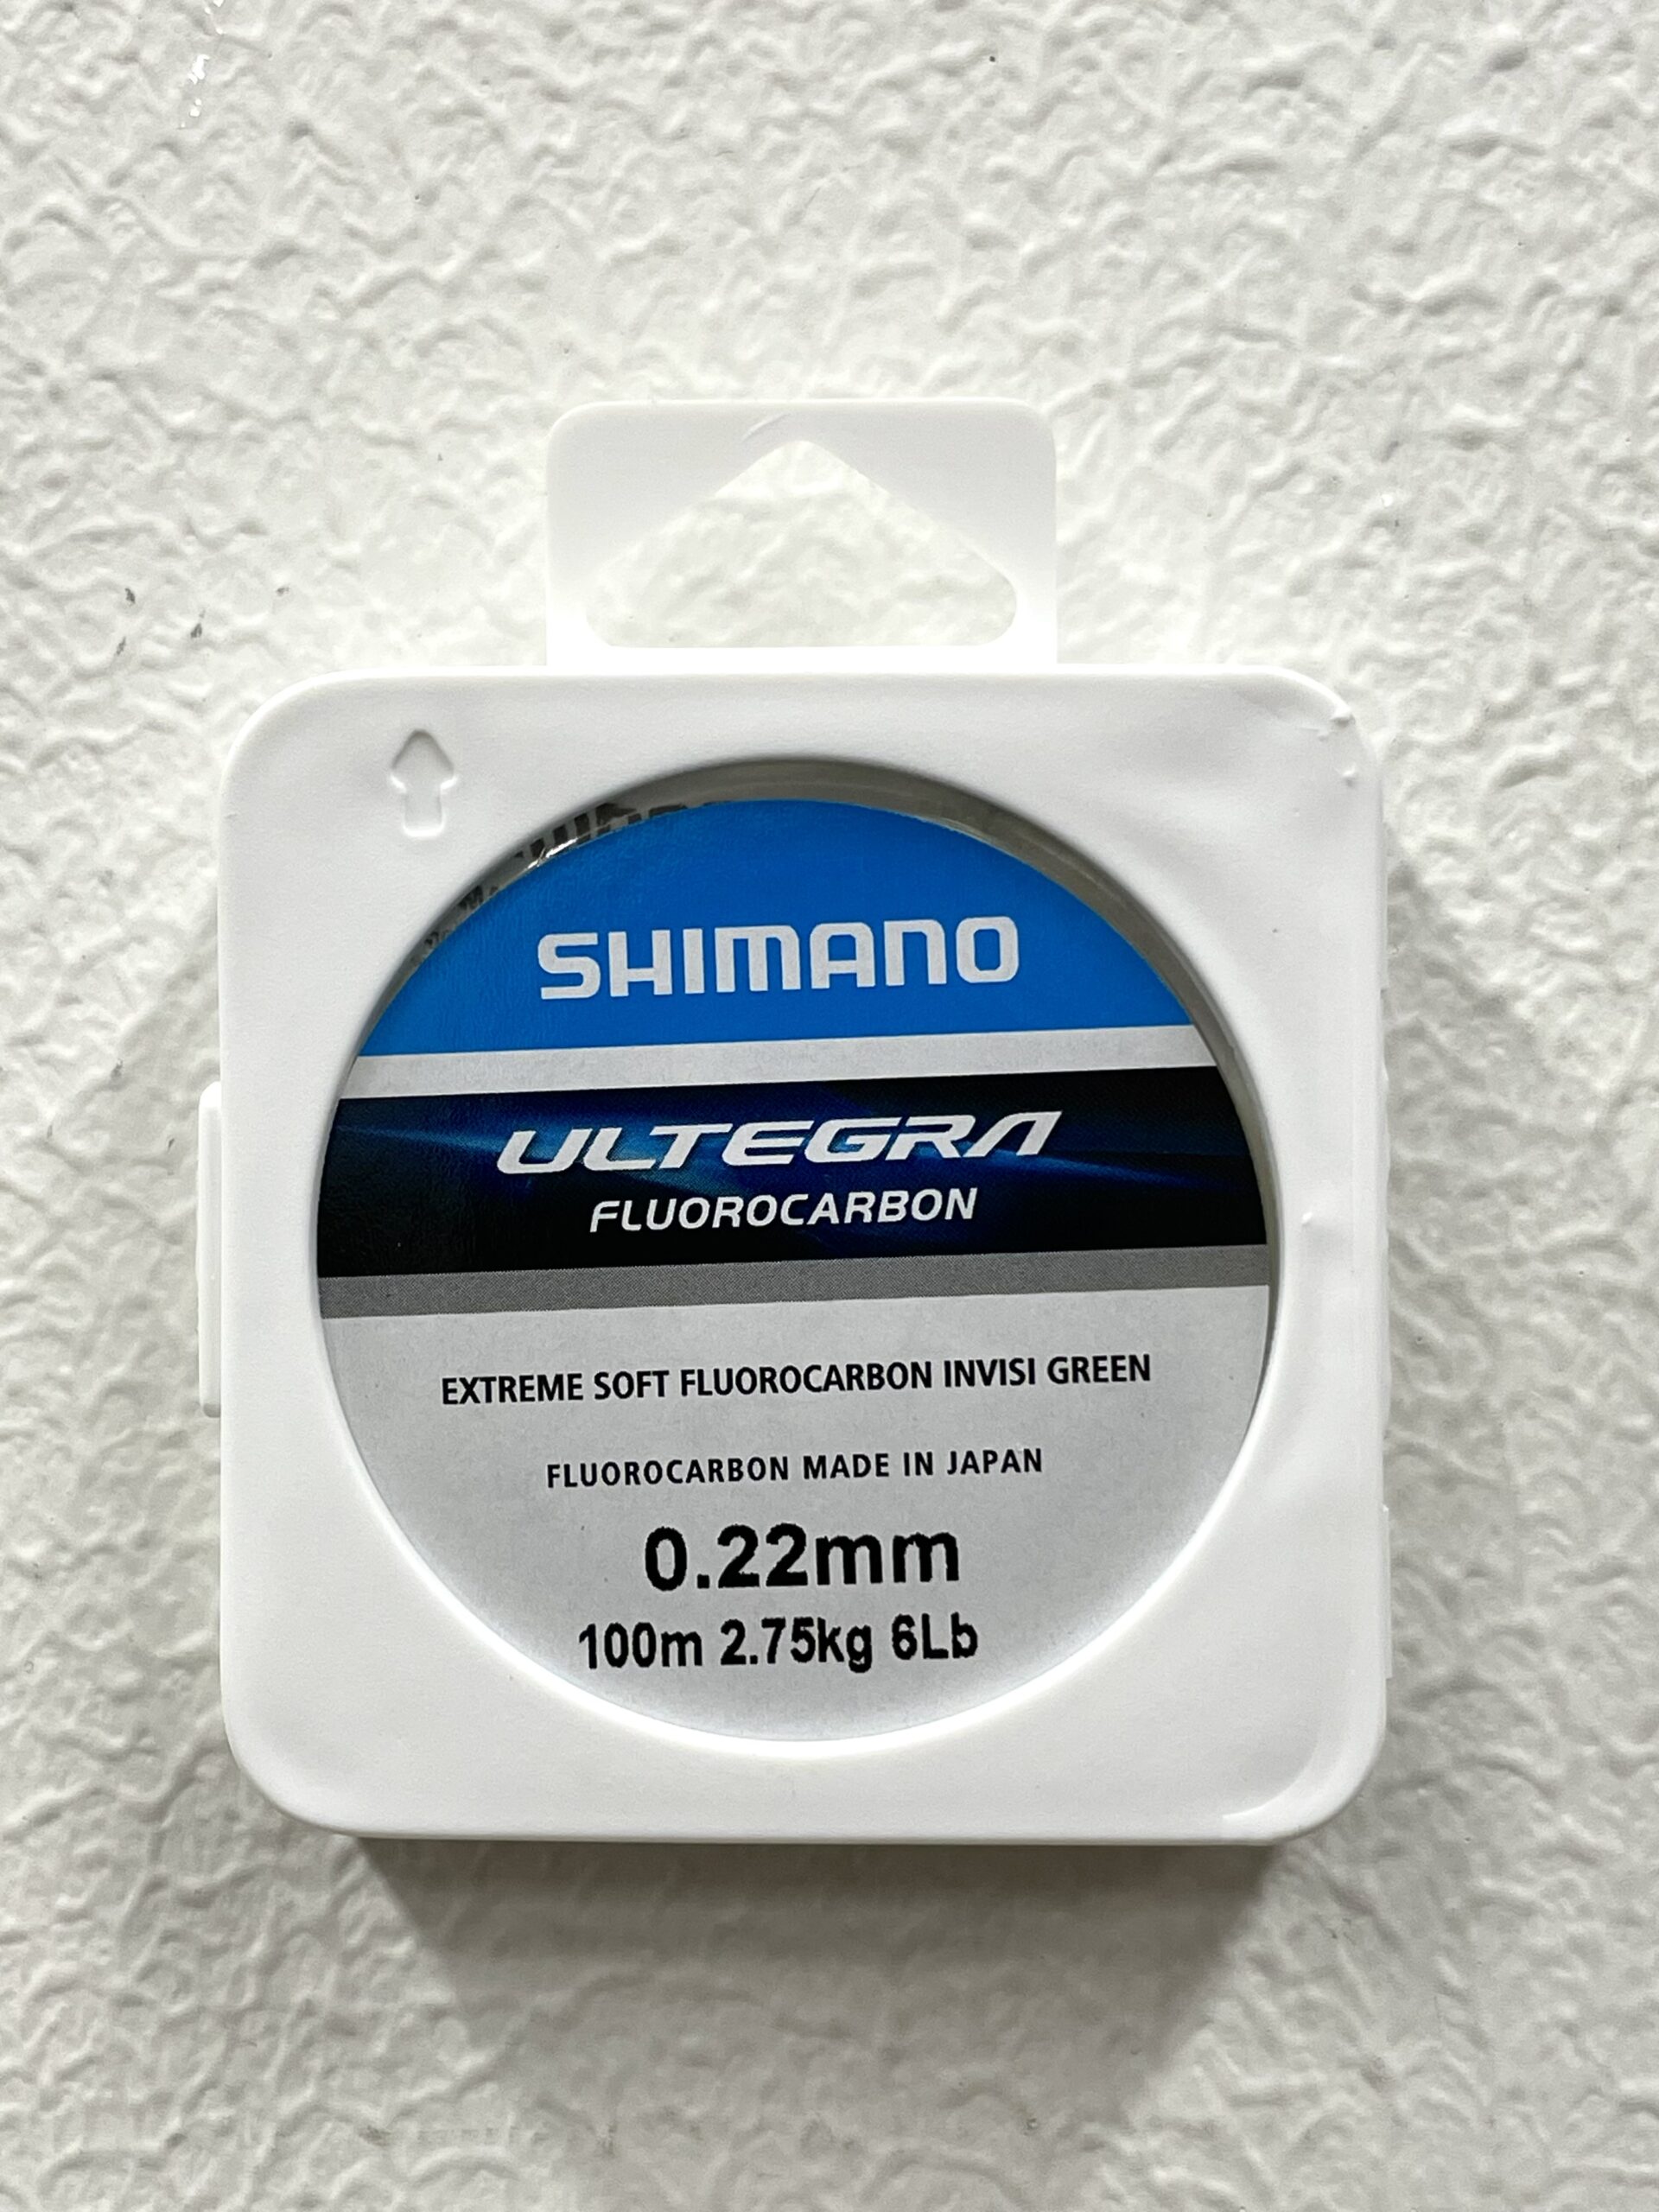 Shimano Ultegra Fluorocarbon Invisi Green